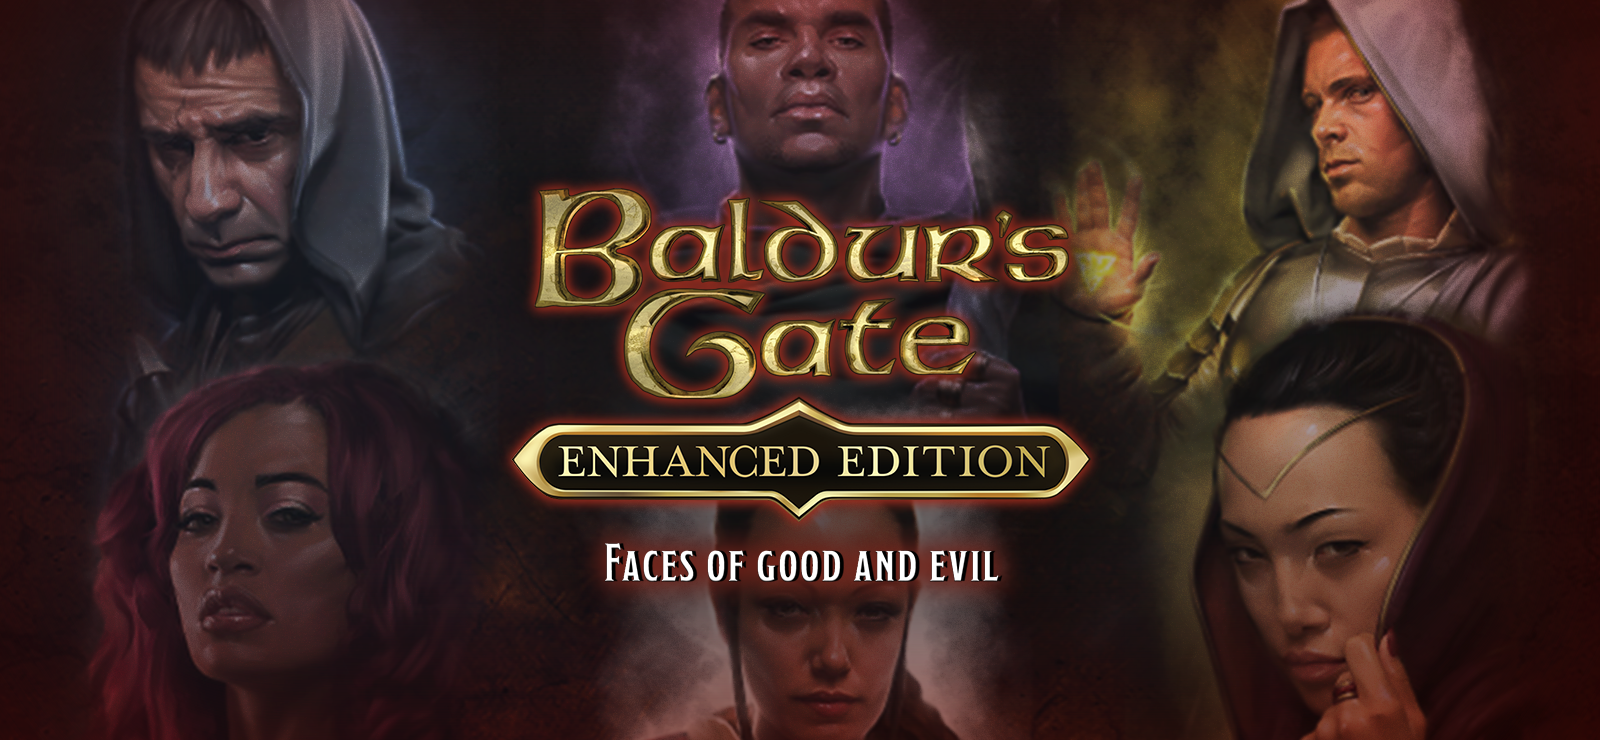 Baldur's Gate: Faces Of Good And Evil